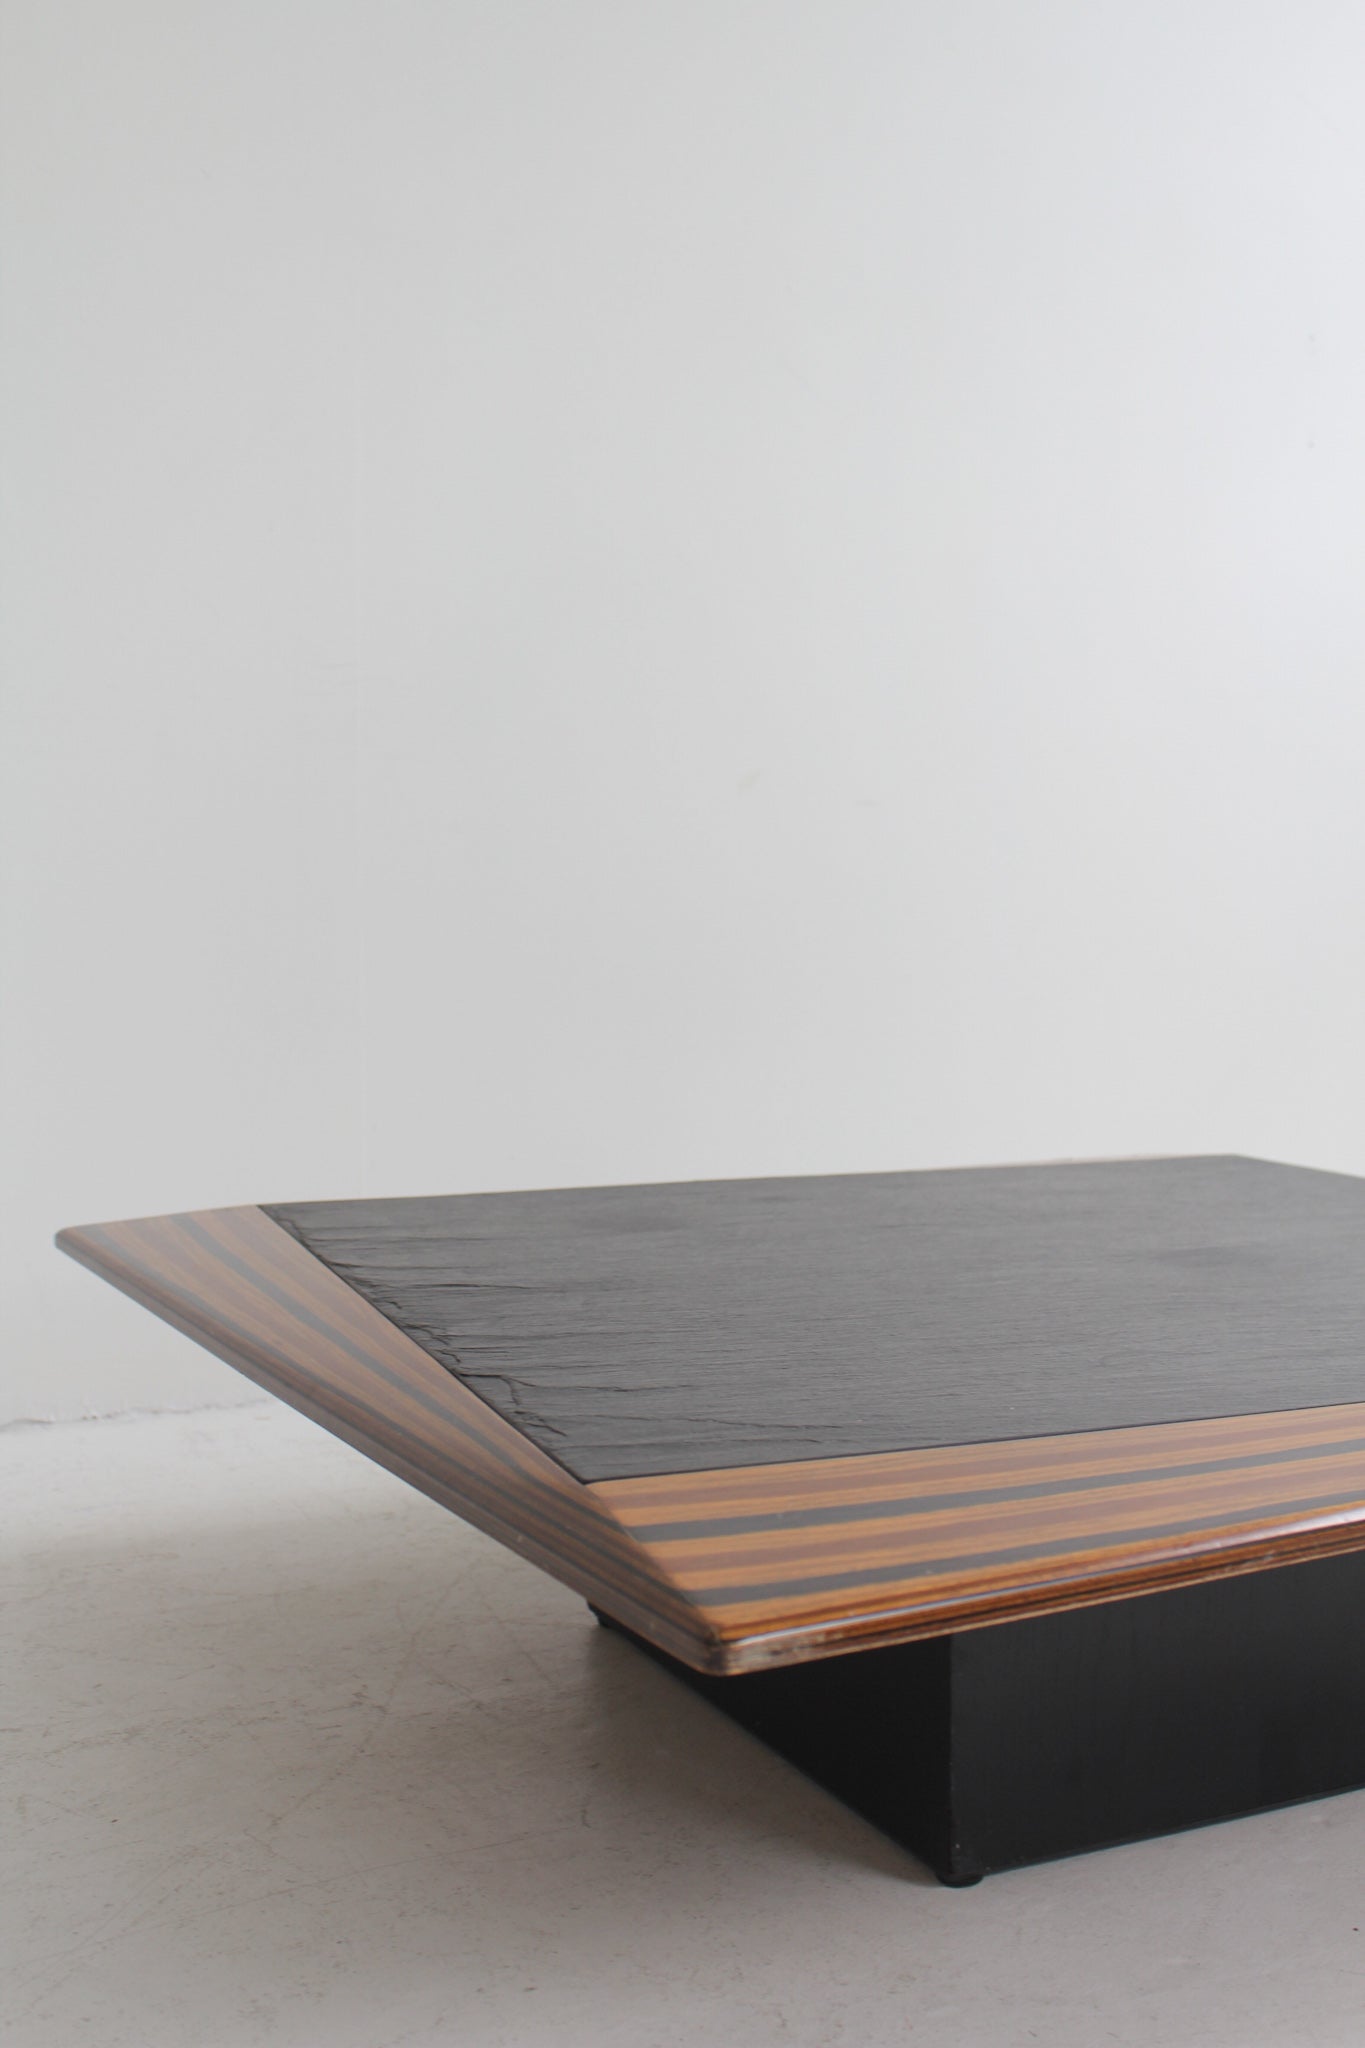 Slate and Wood Coffee Table